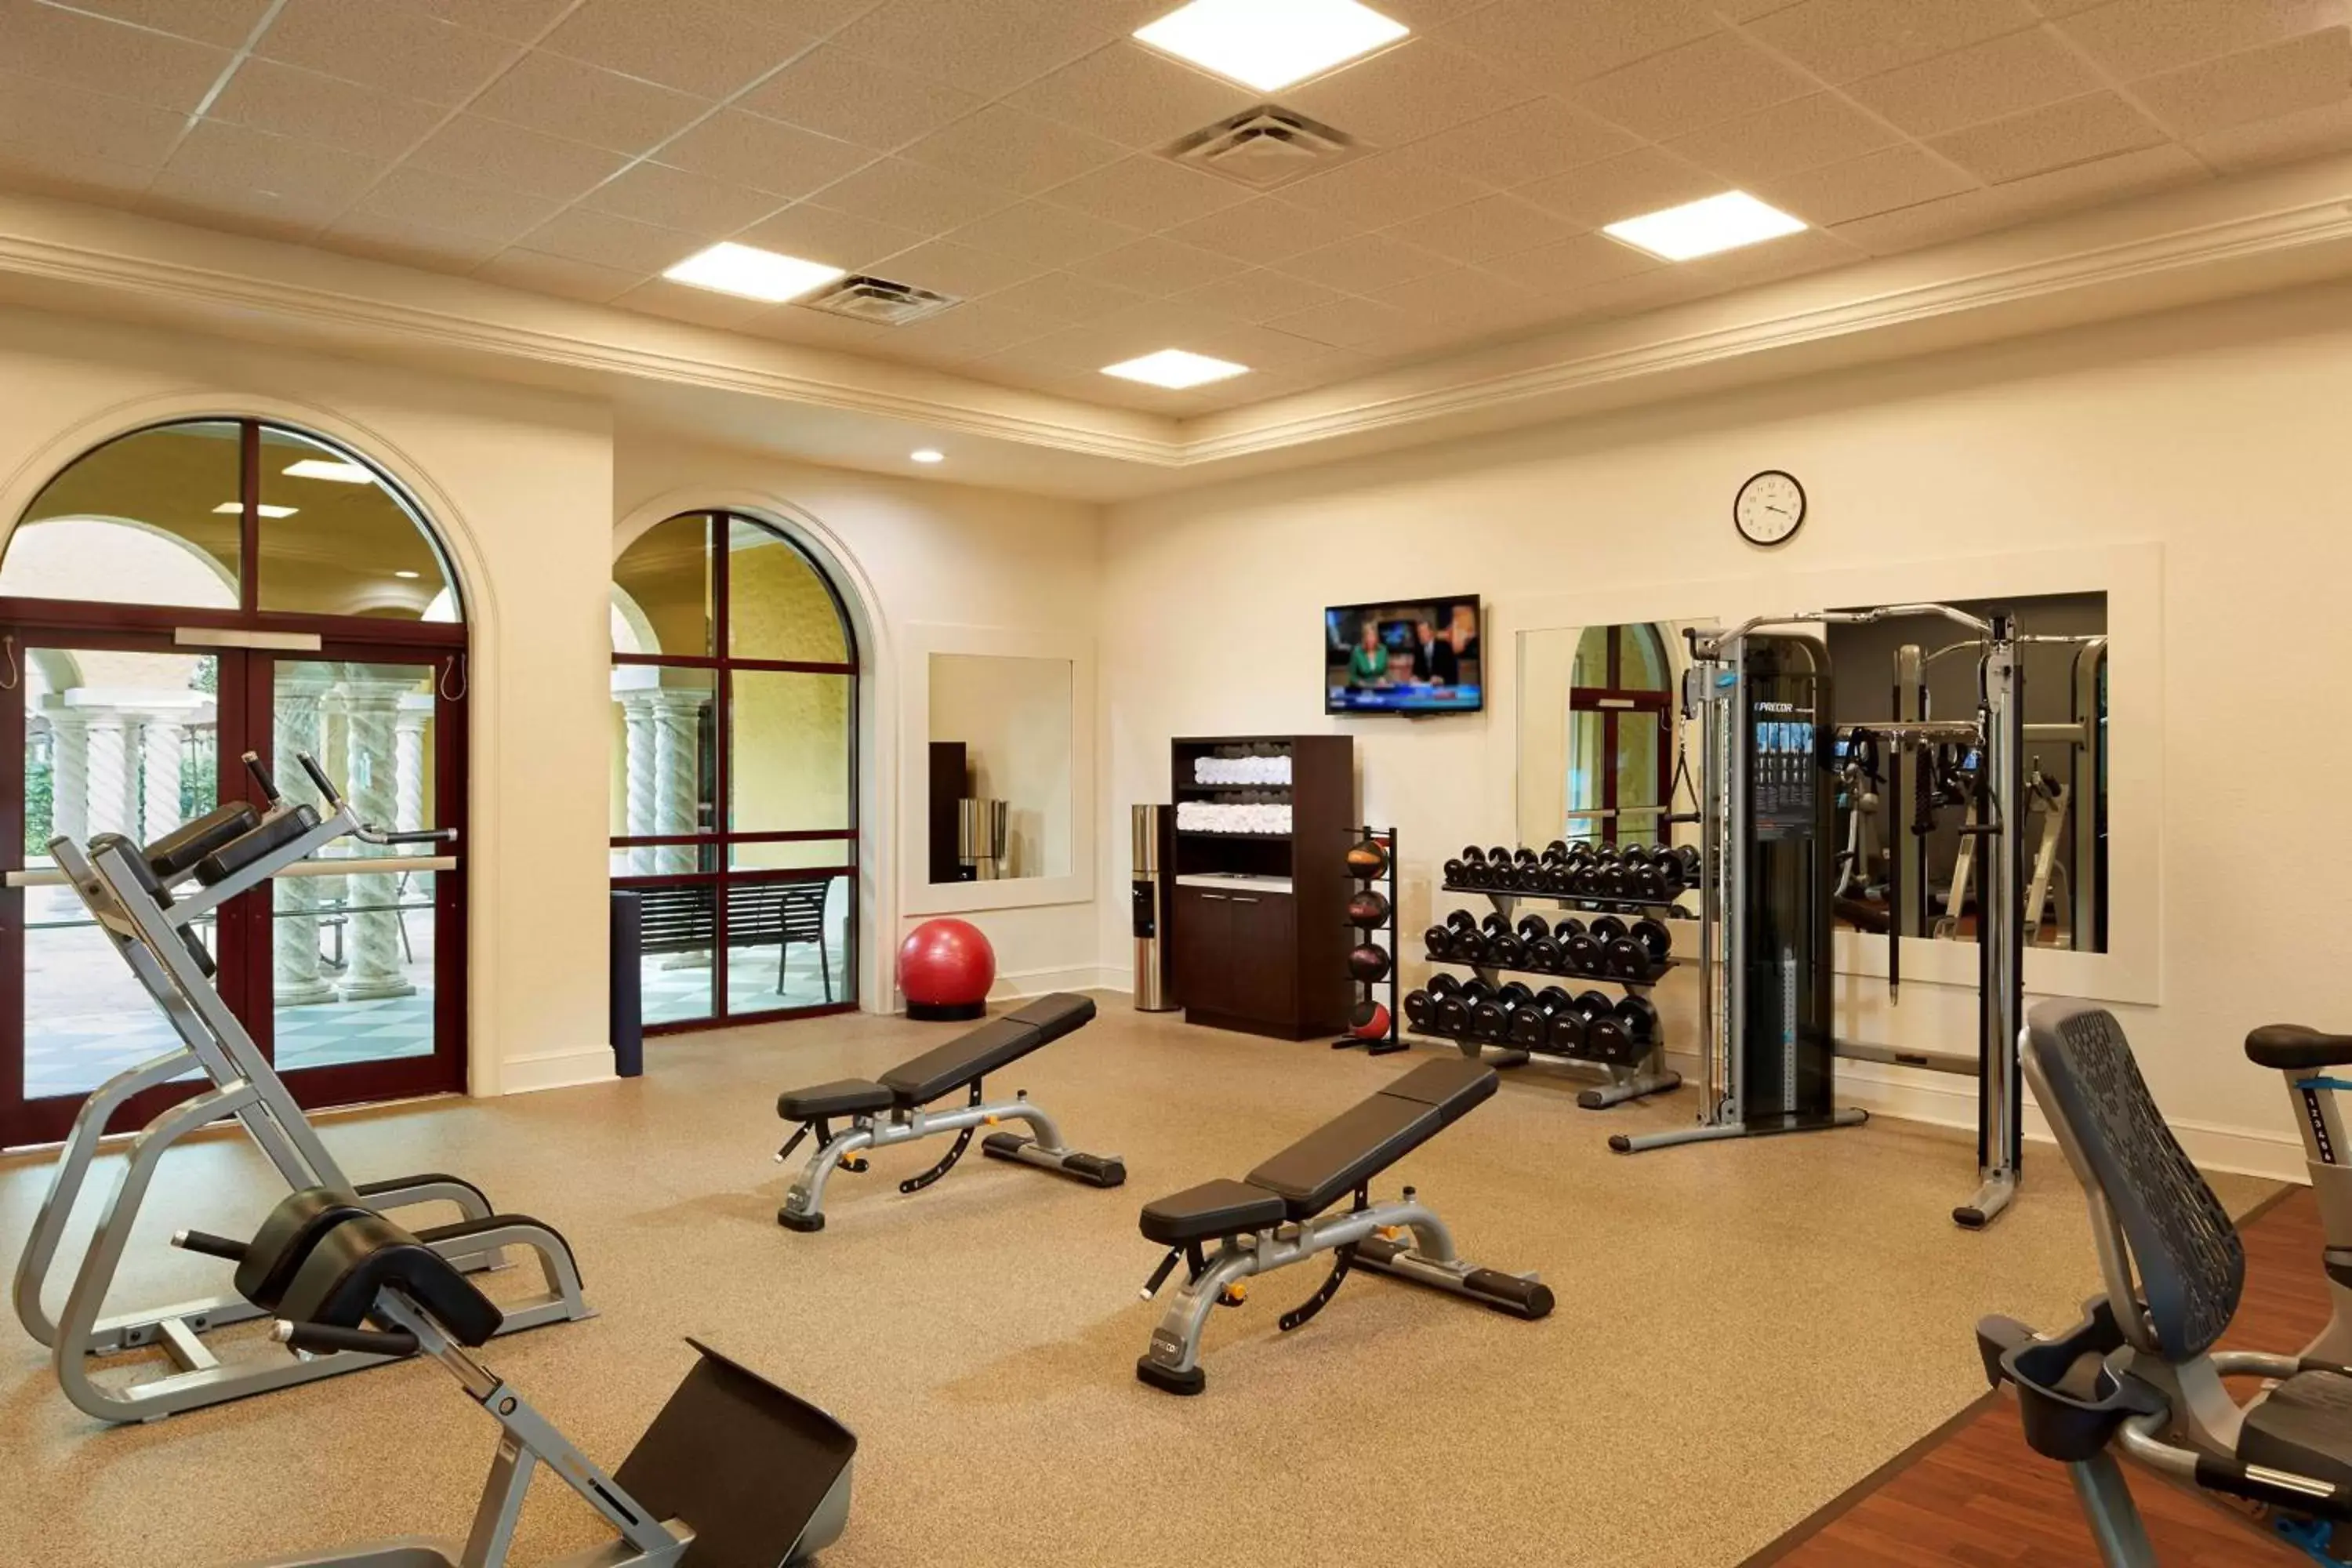 Fitness centre/facilities, Fitness Center/Facilities in Hilton Grand Vacations Club Tuscany Village Orlando